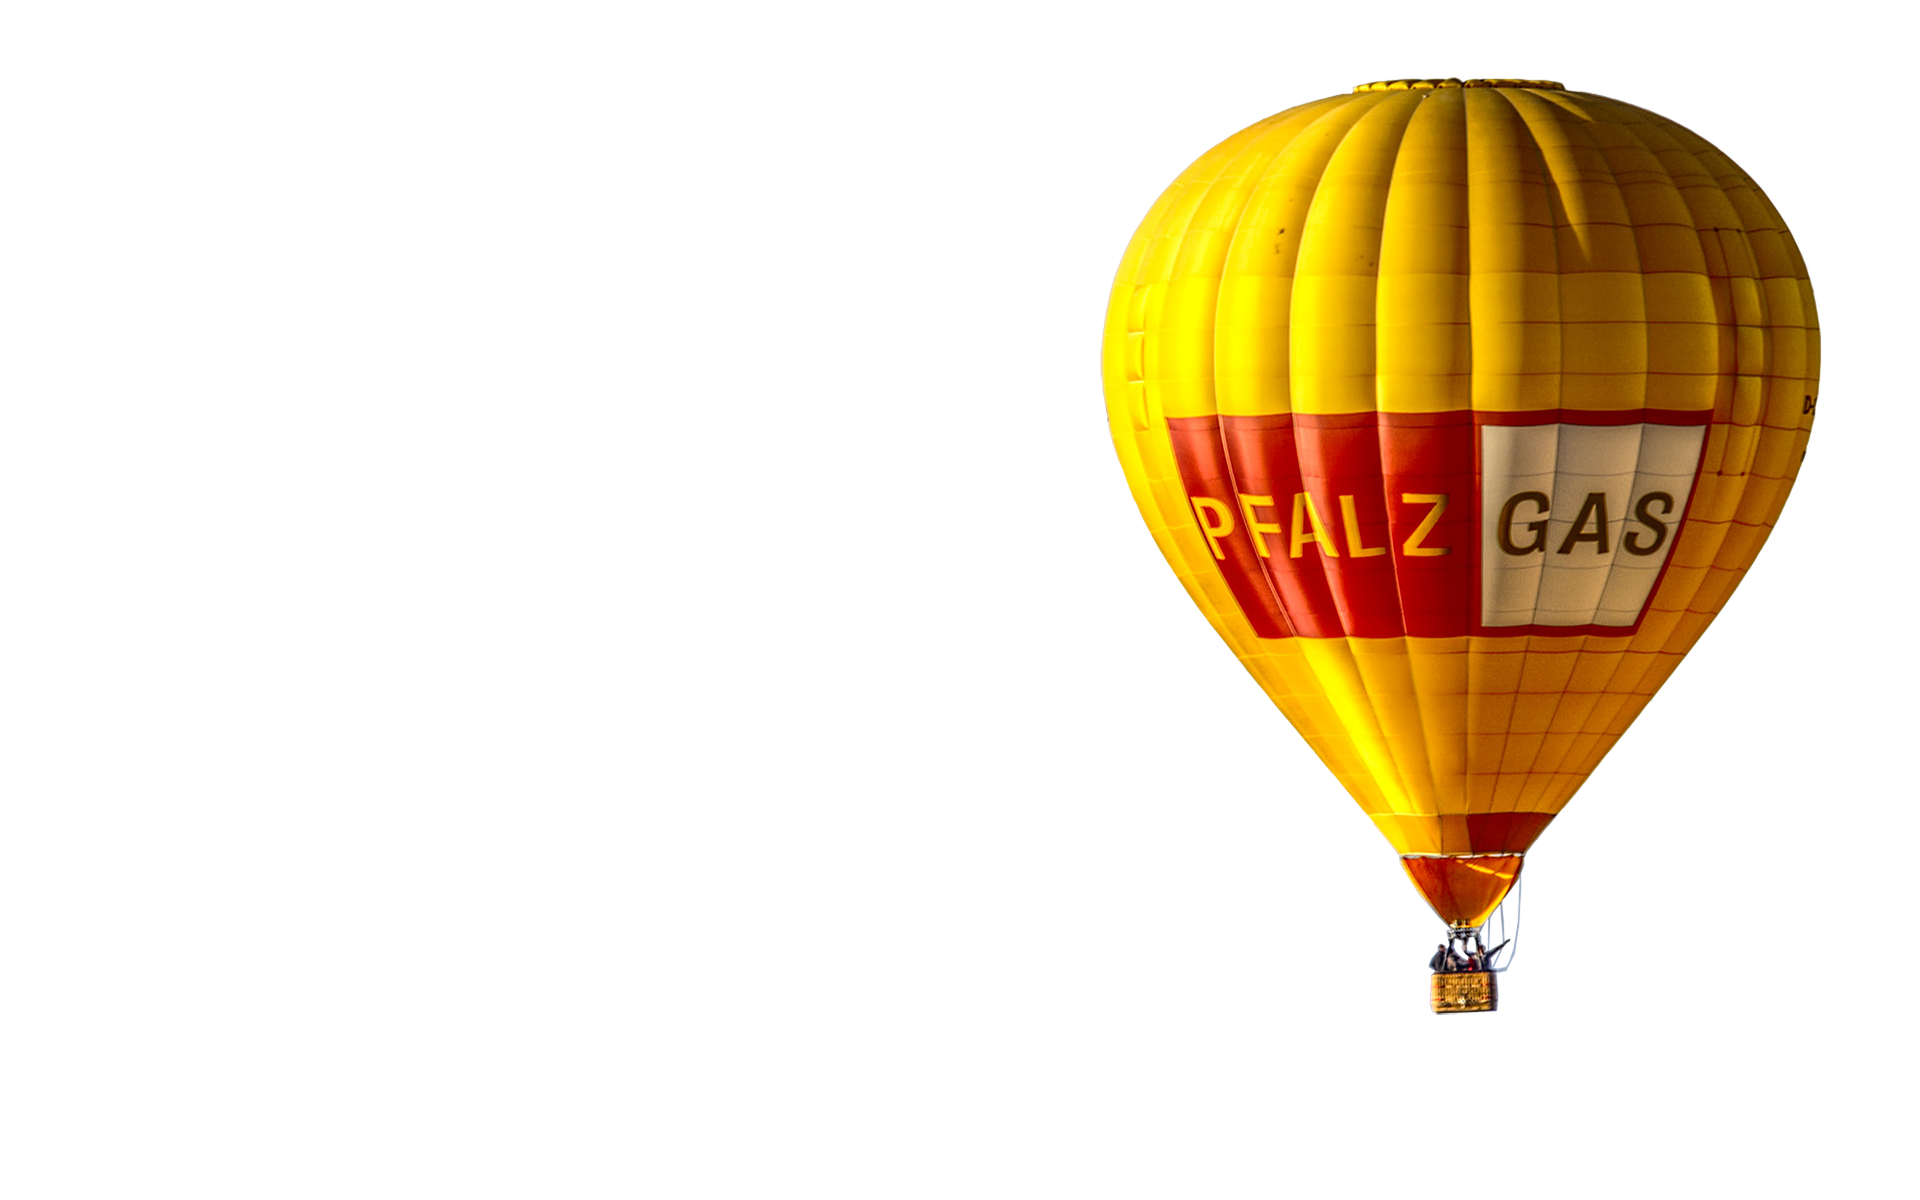 A Hot Air Balloon In The Sky